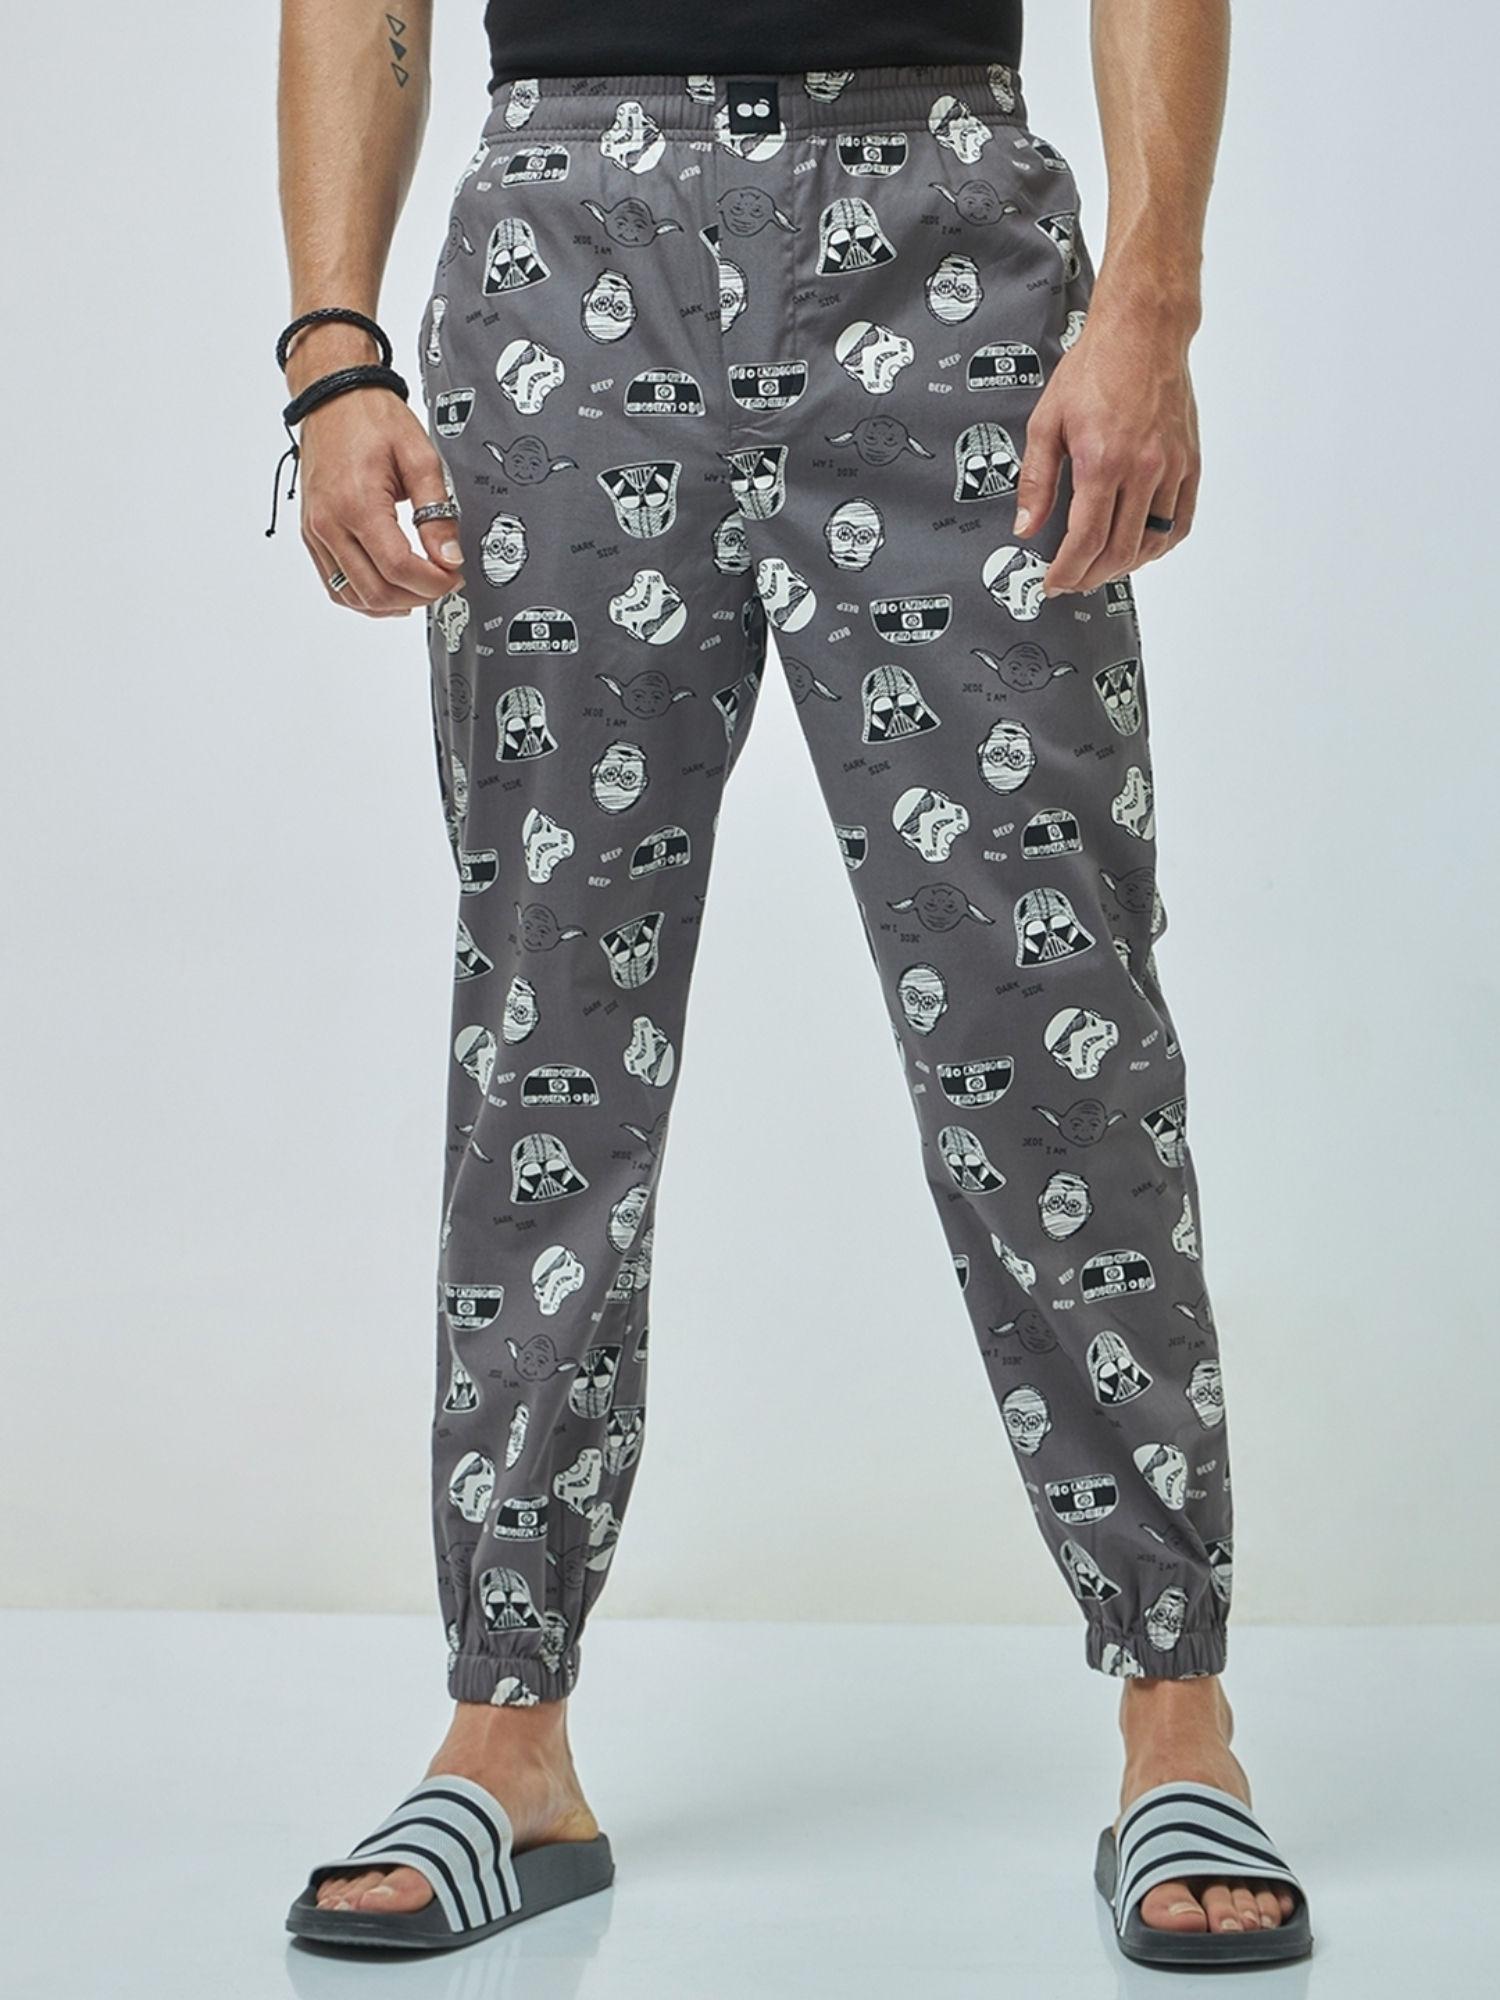 men's grey all over printed pyjamas